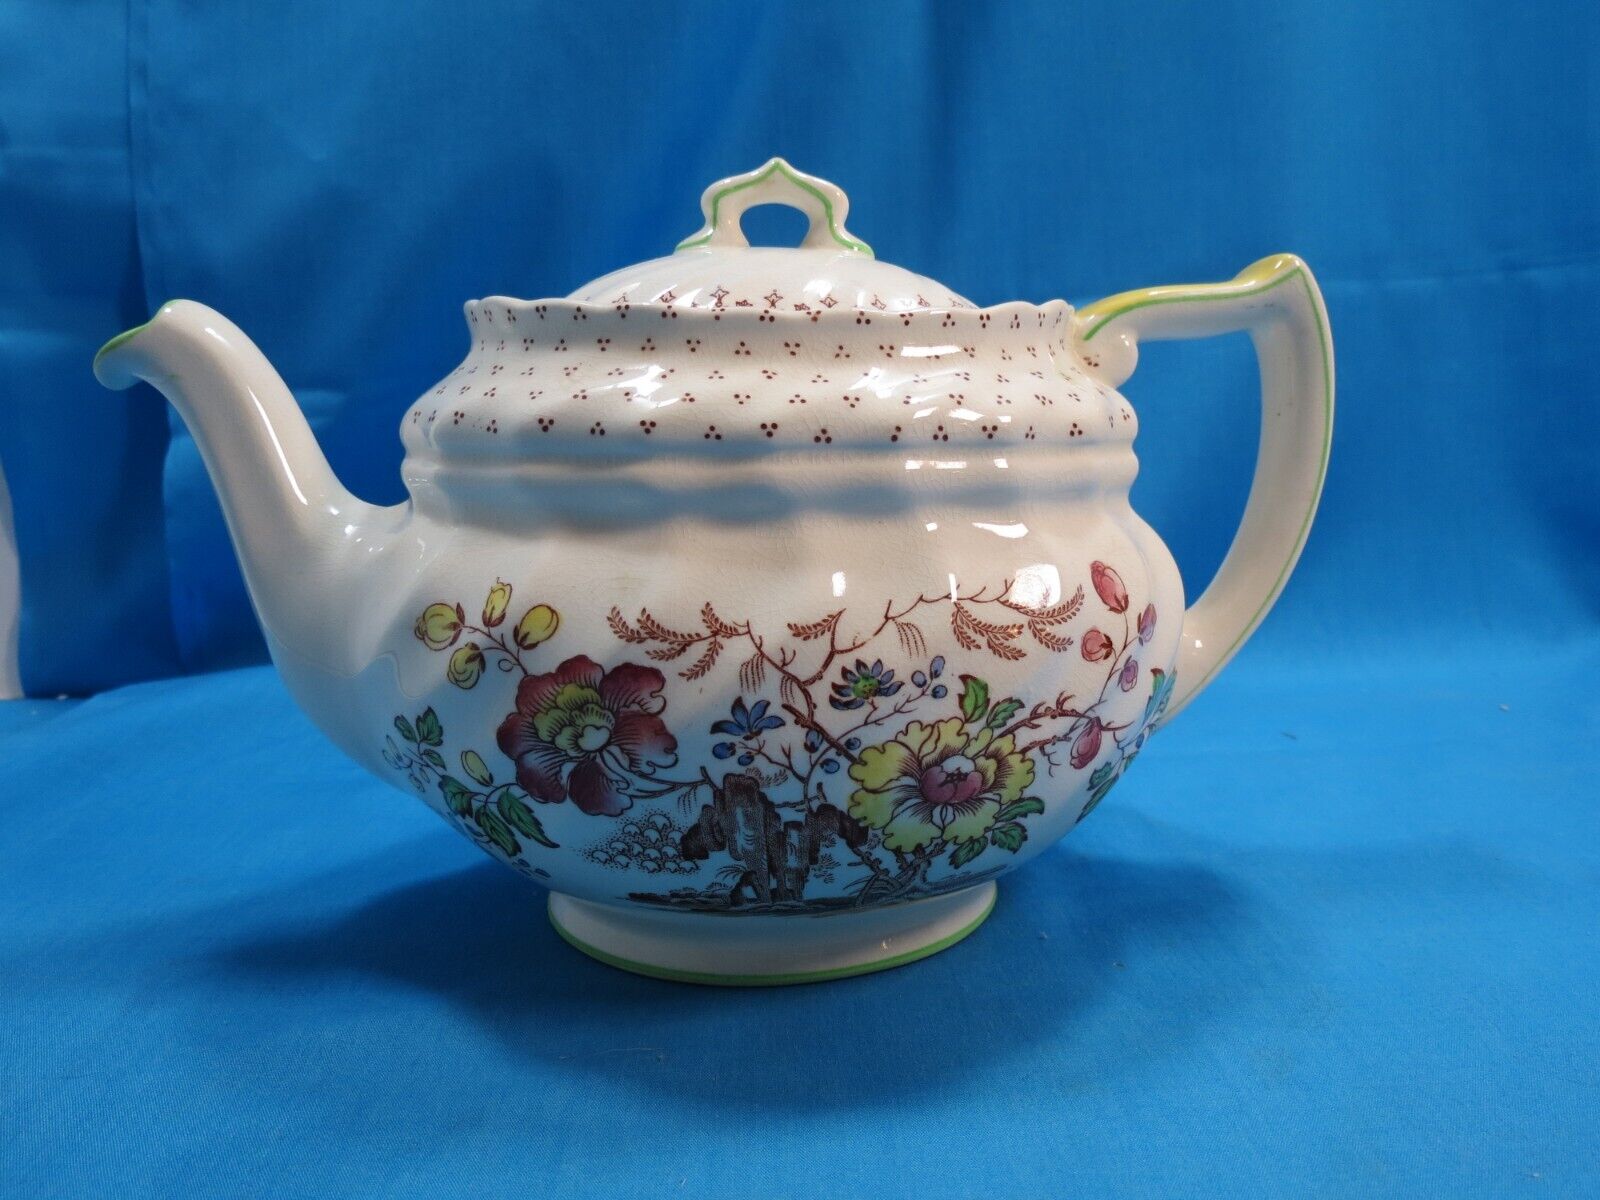 ANTIQUE CHINA Teapot. Royal Doulton Grantham D5477, White with Floral Design